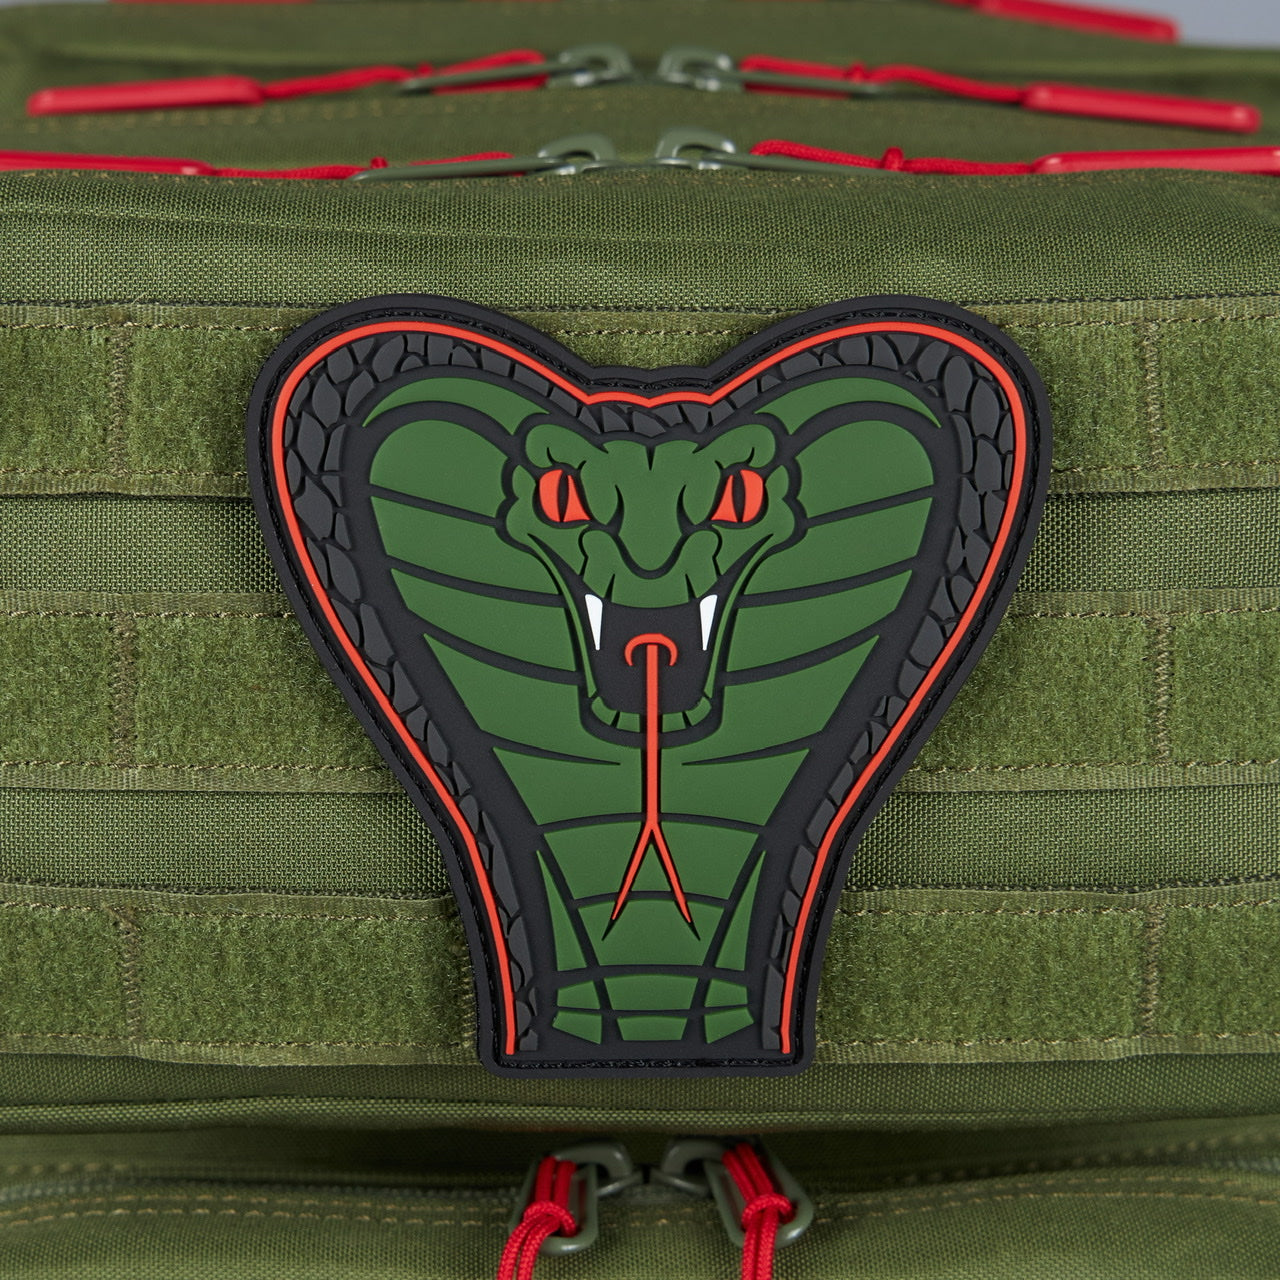 35L Backpack Venom Green